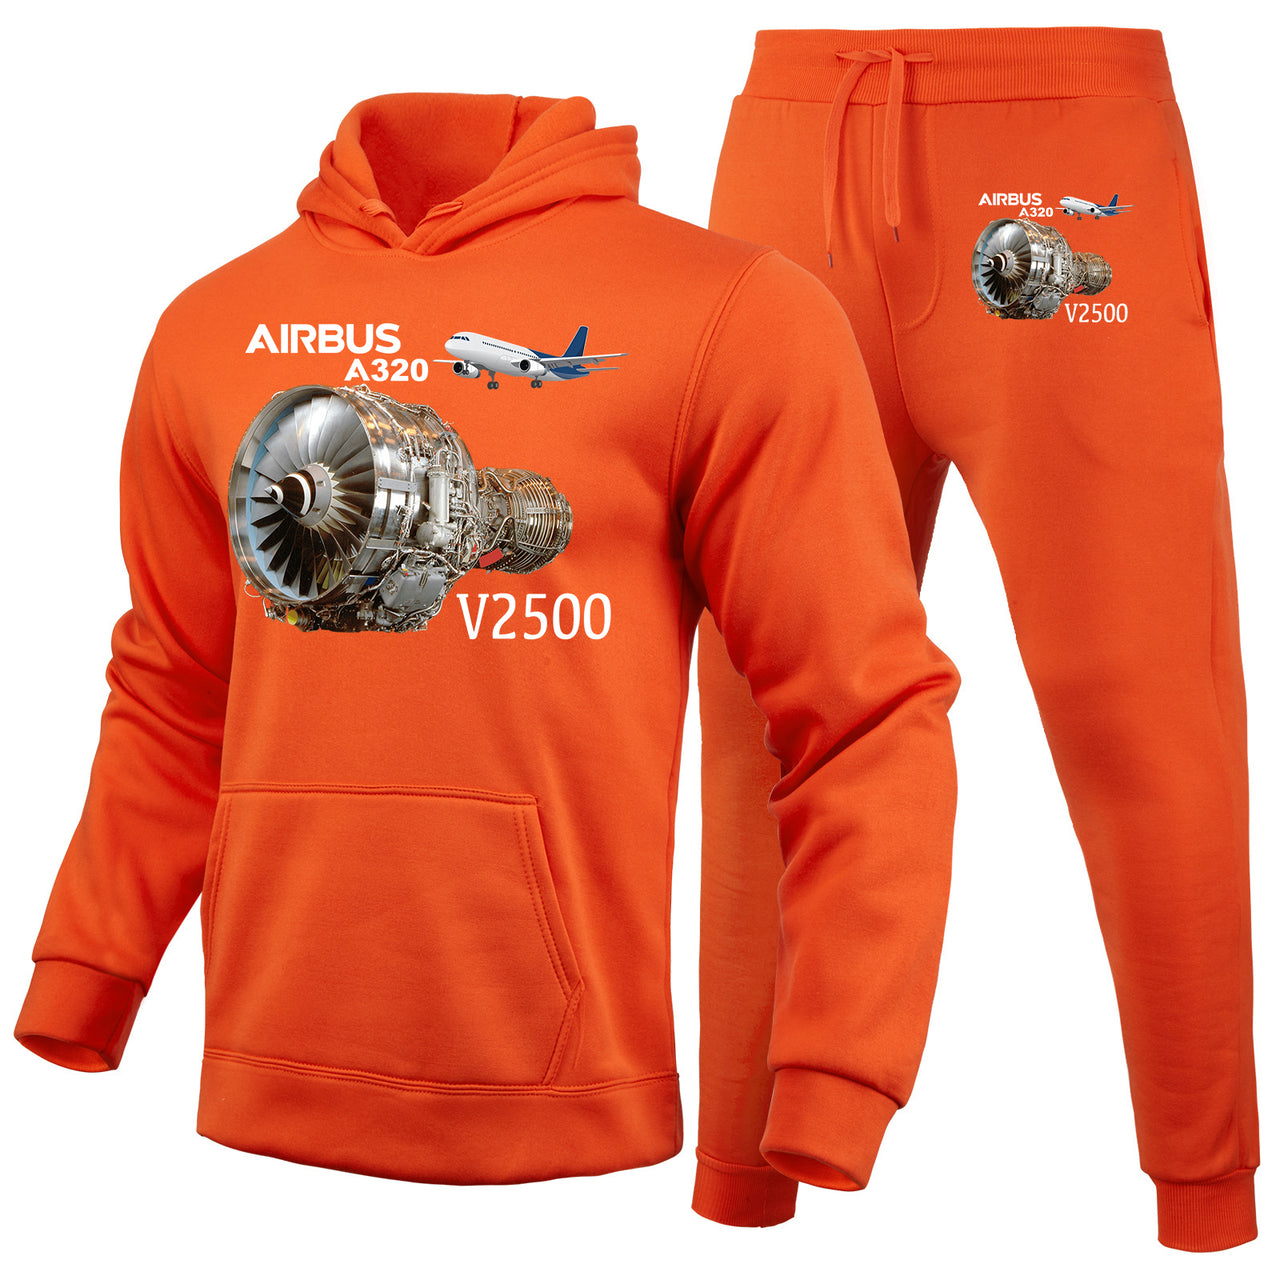 Airbus A320 & V2500 Engine Designed Hoodies & Sweatpants Set